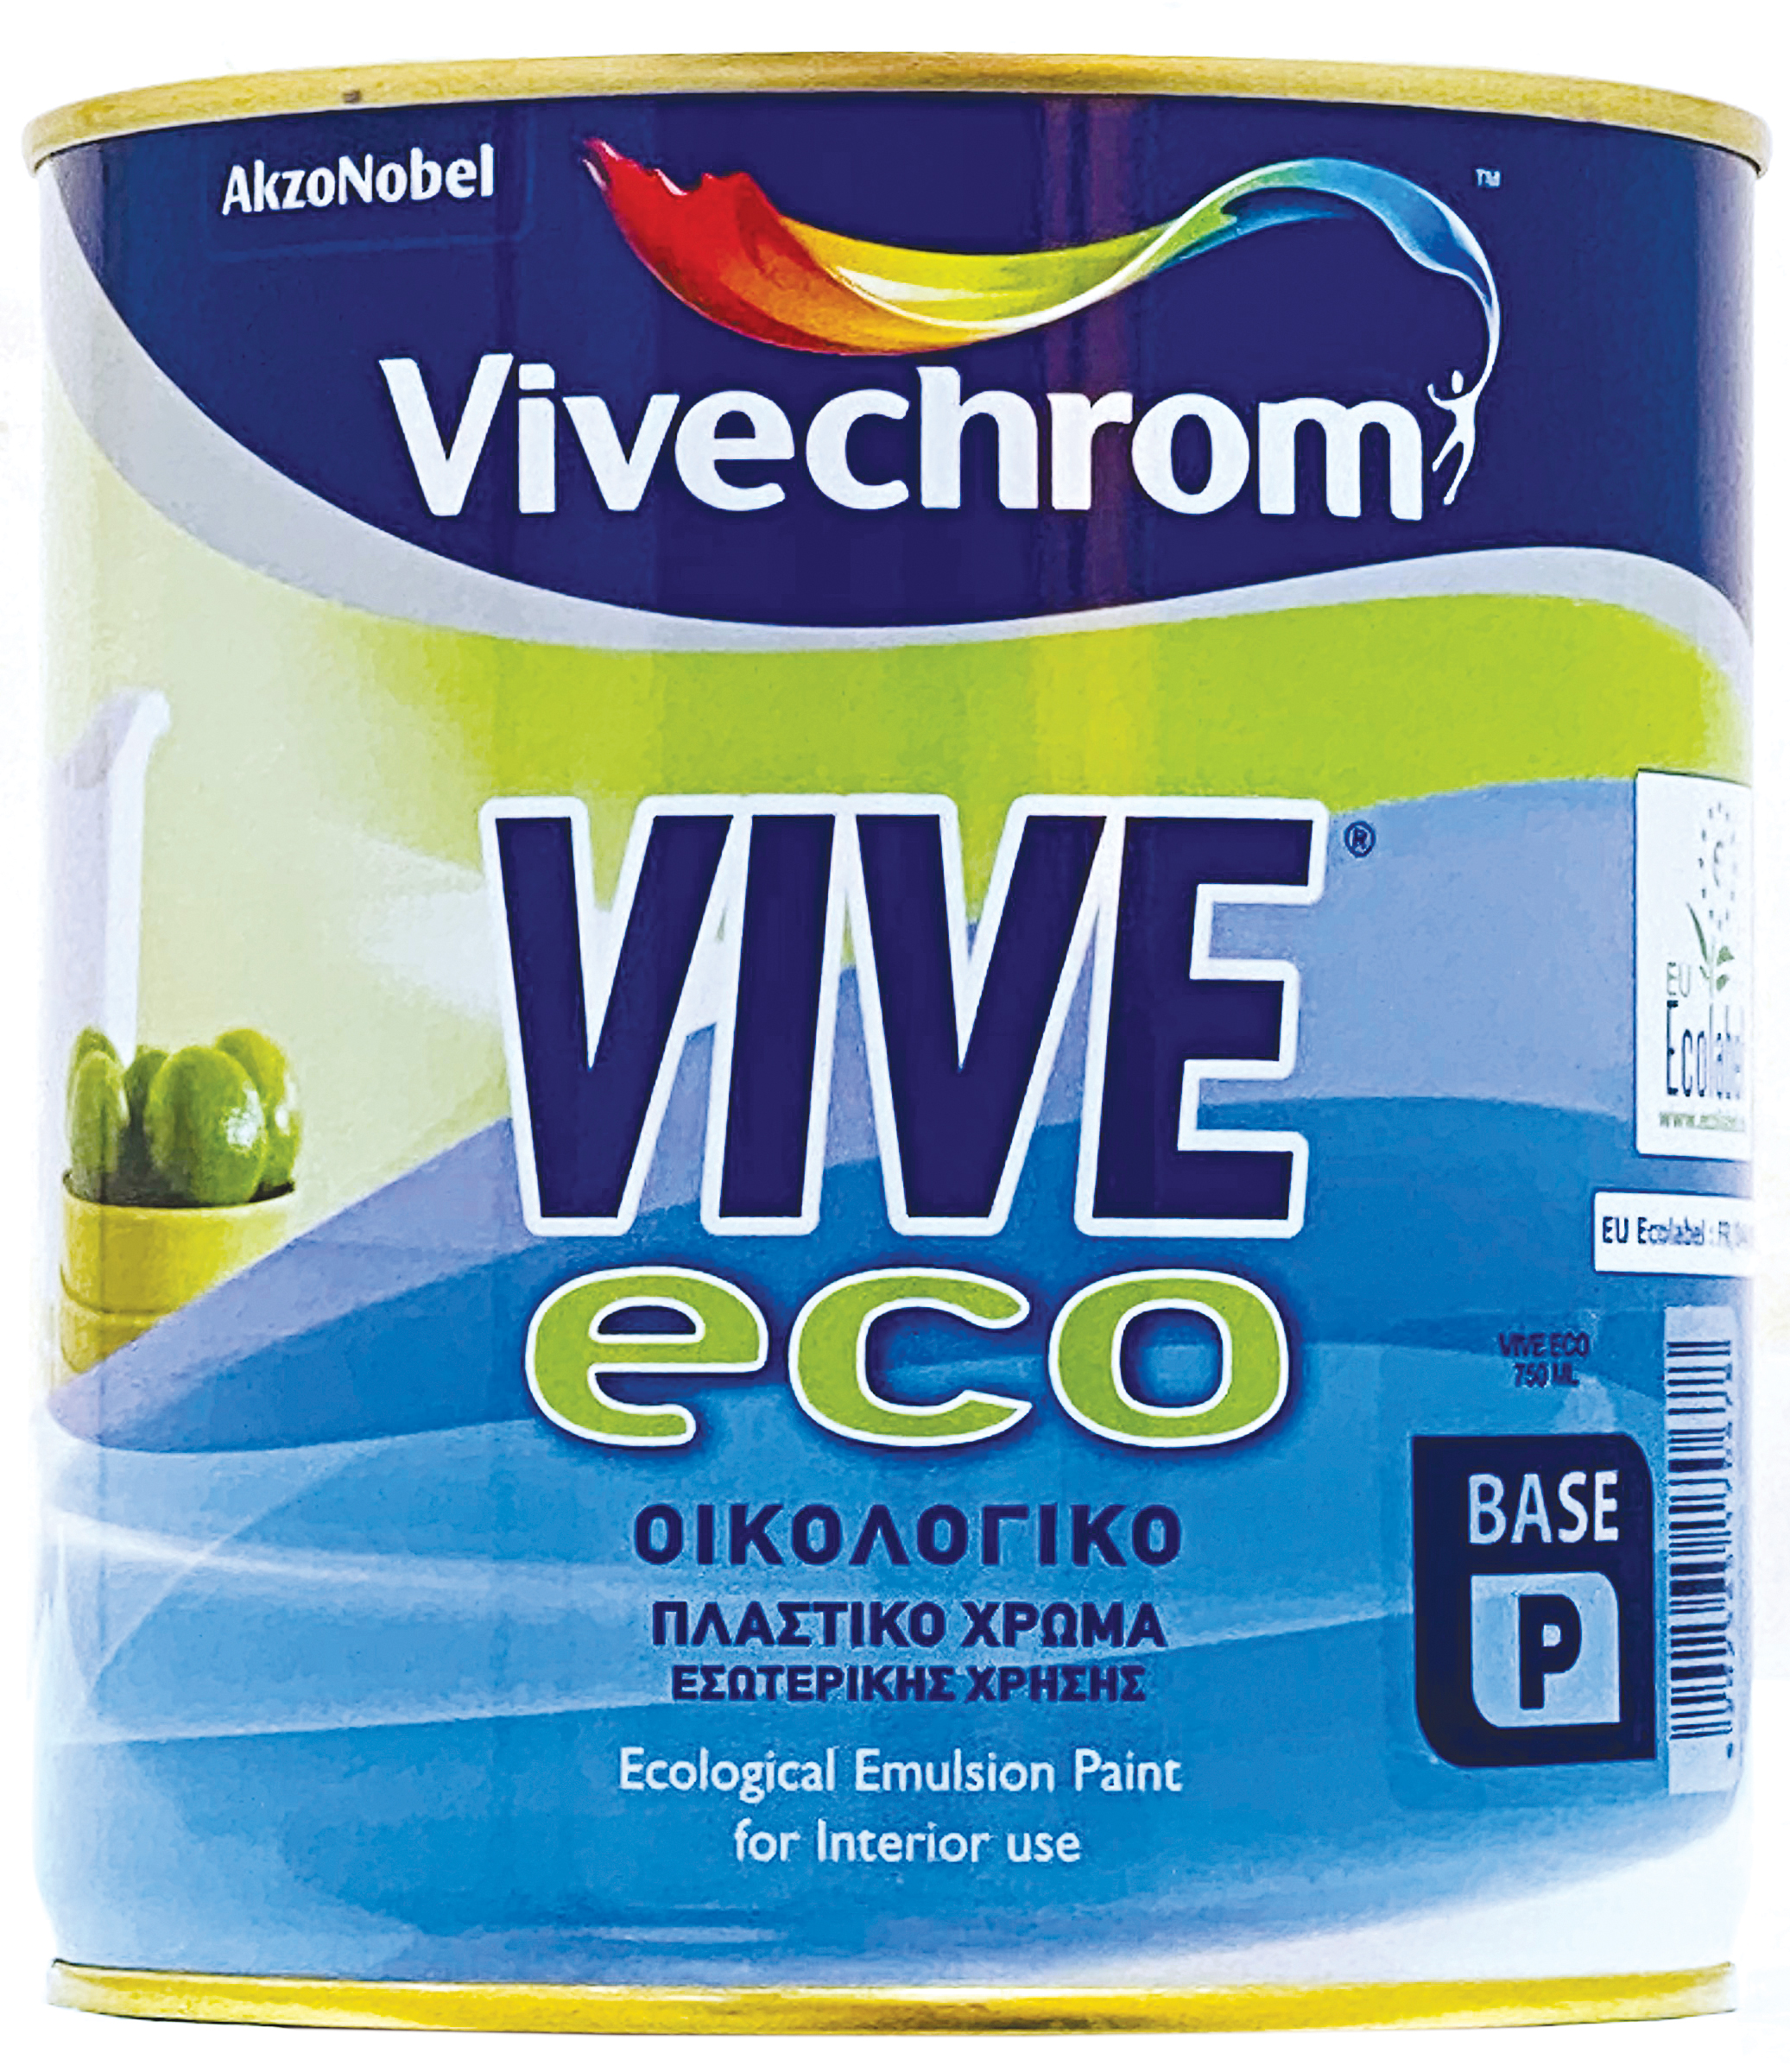 VIVECHROM BASE P ECO PRO EMULSION 0.75L